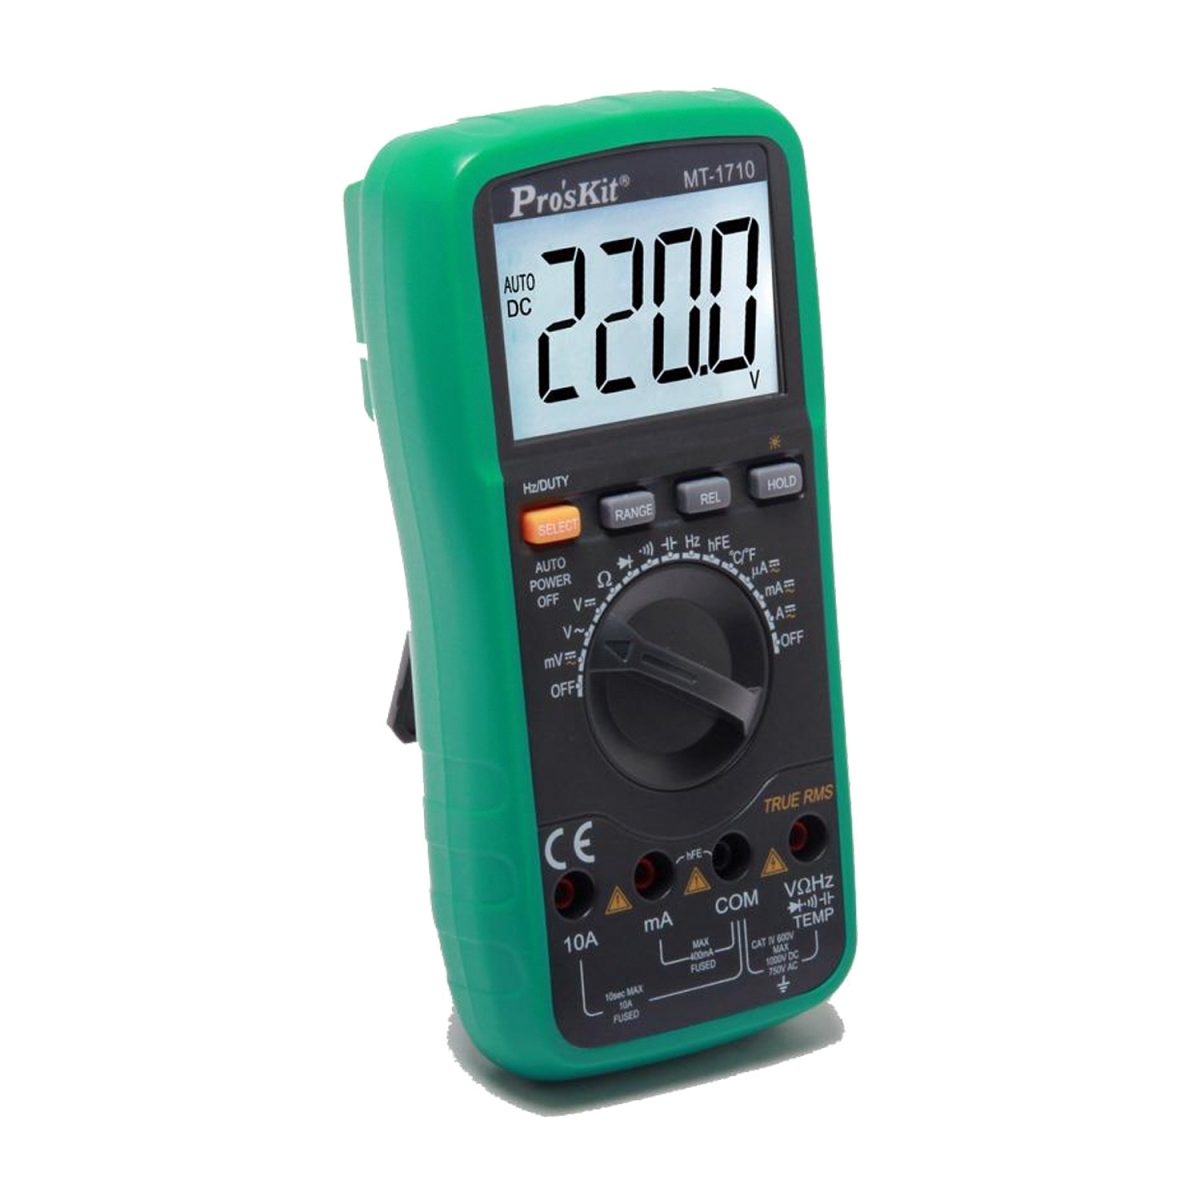 MT-1710 Pro'sKit Digital Handhel Multimeter